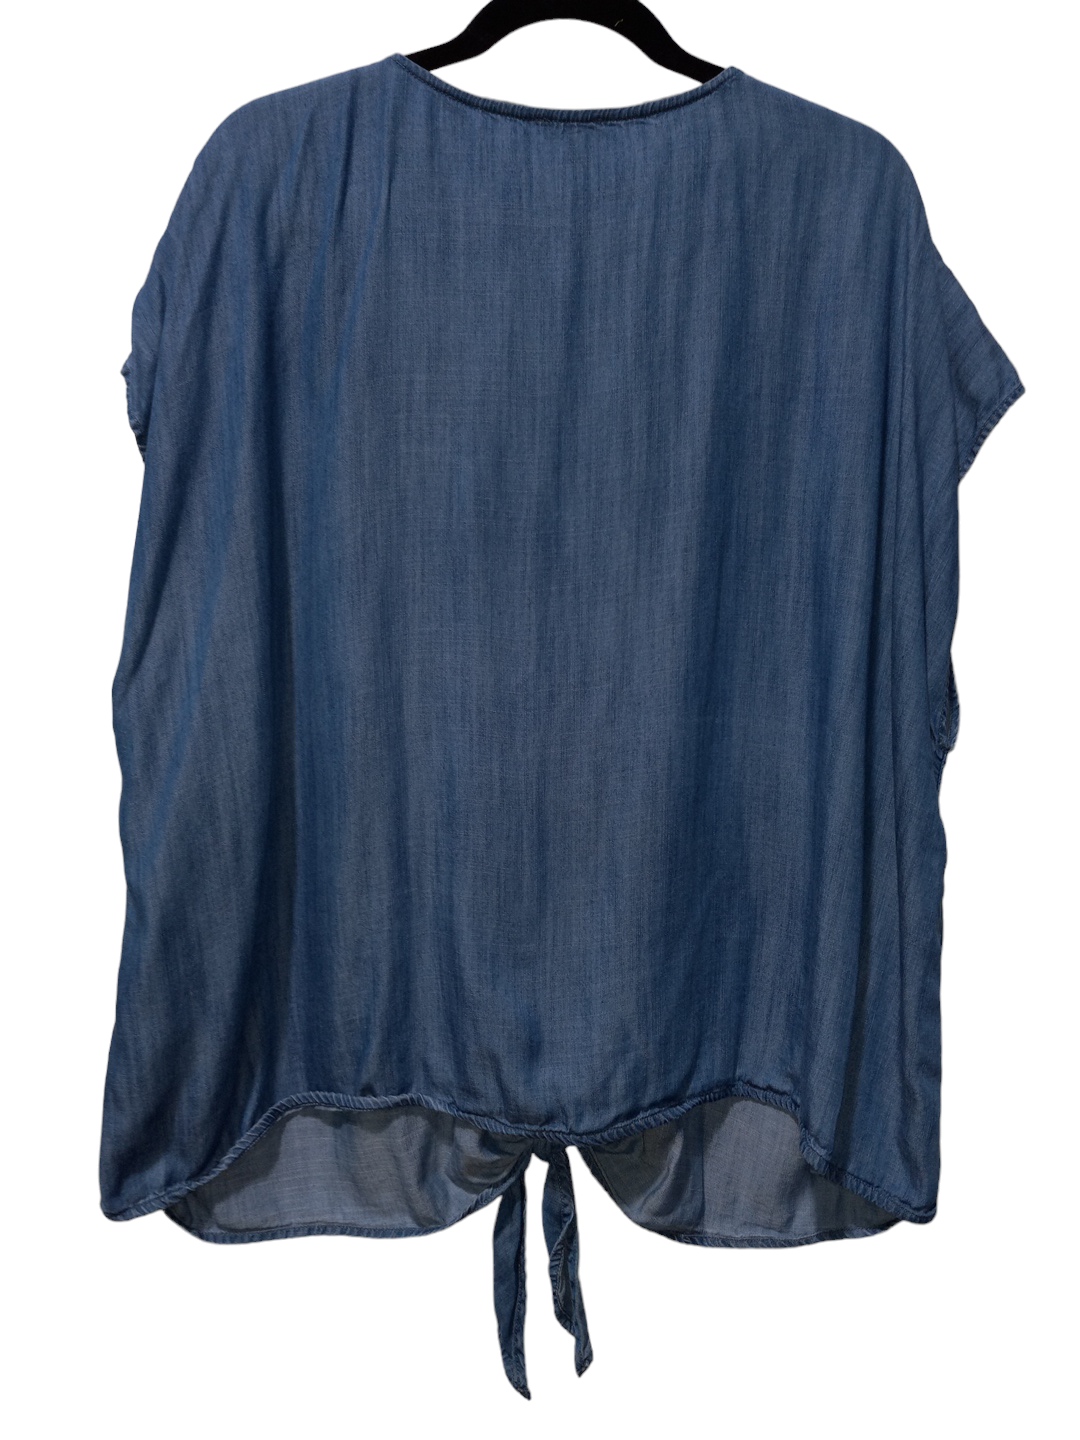 Blue Denim Top Short Sleeve Talbots, Size 3x